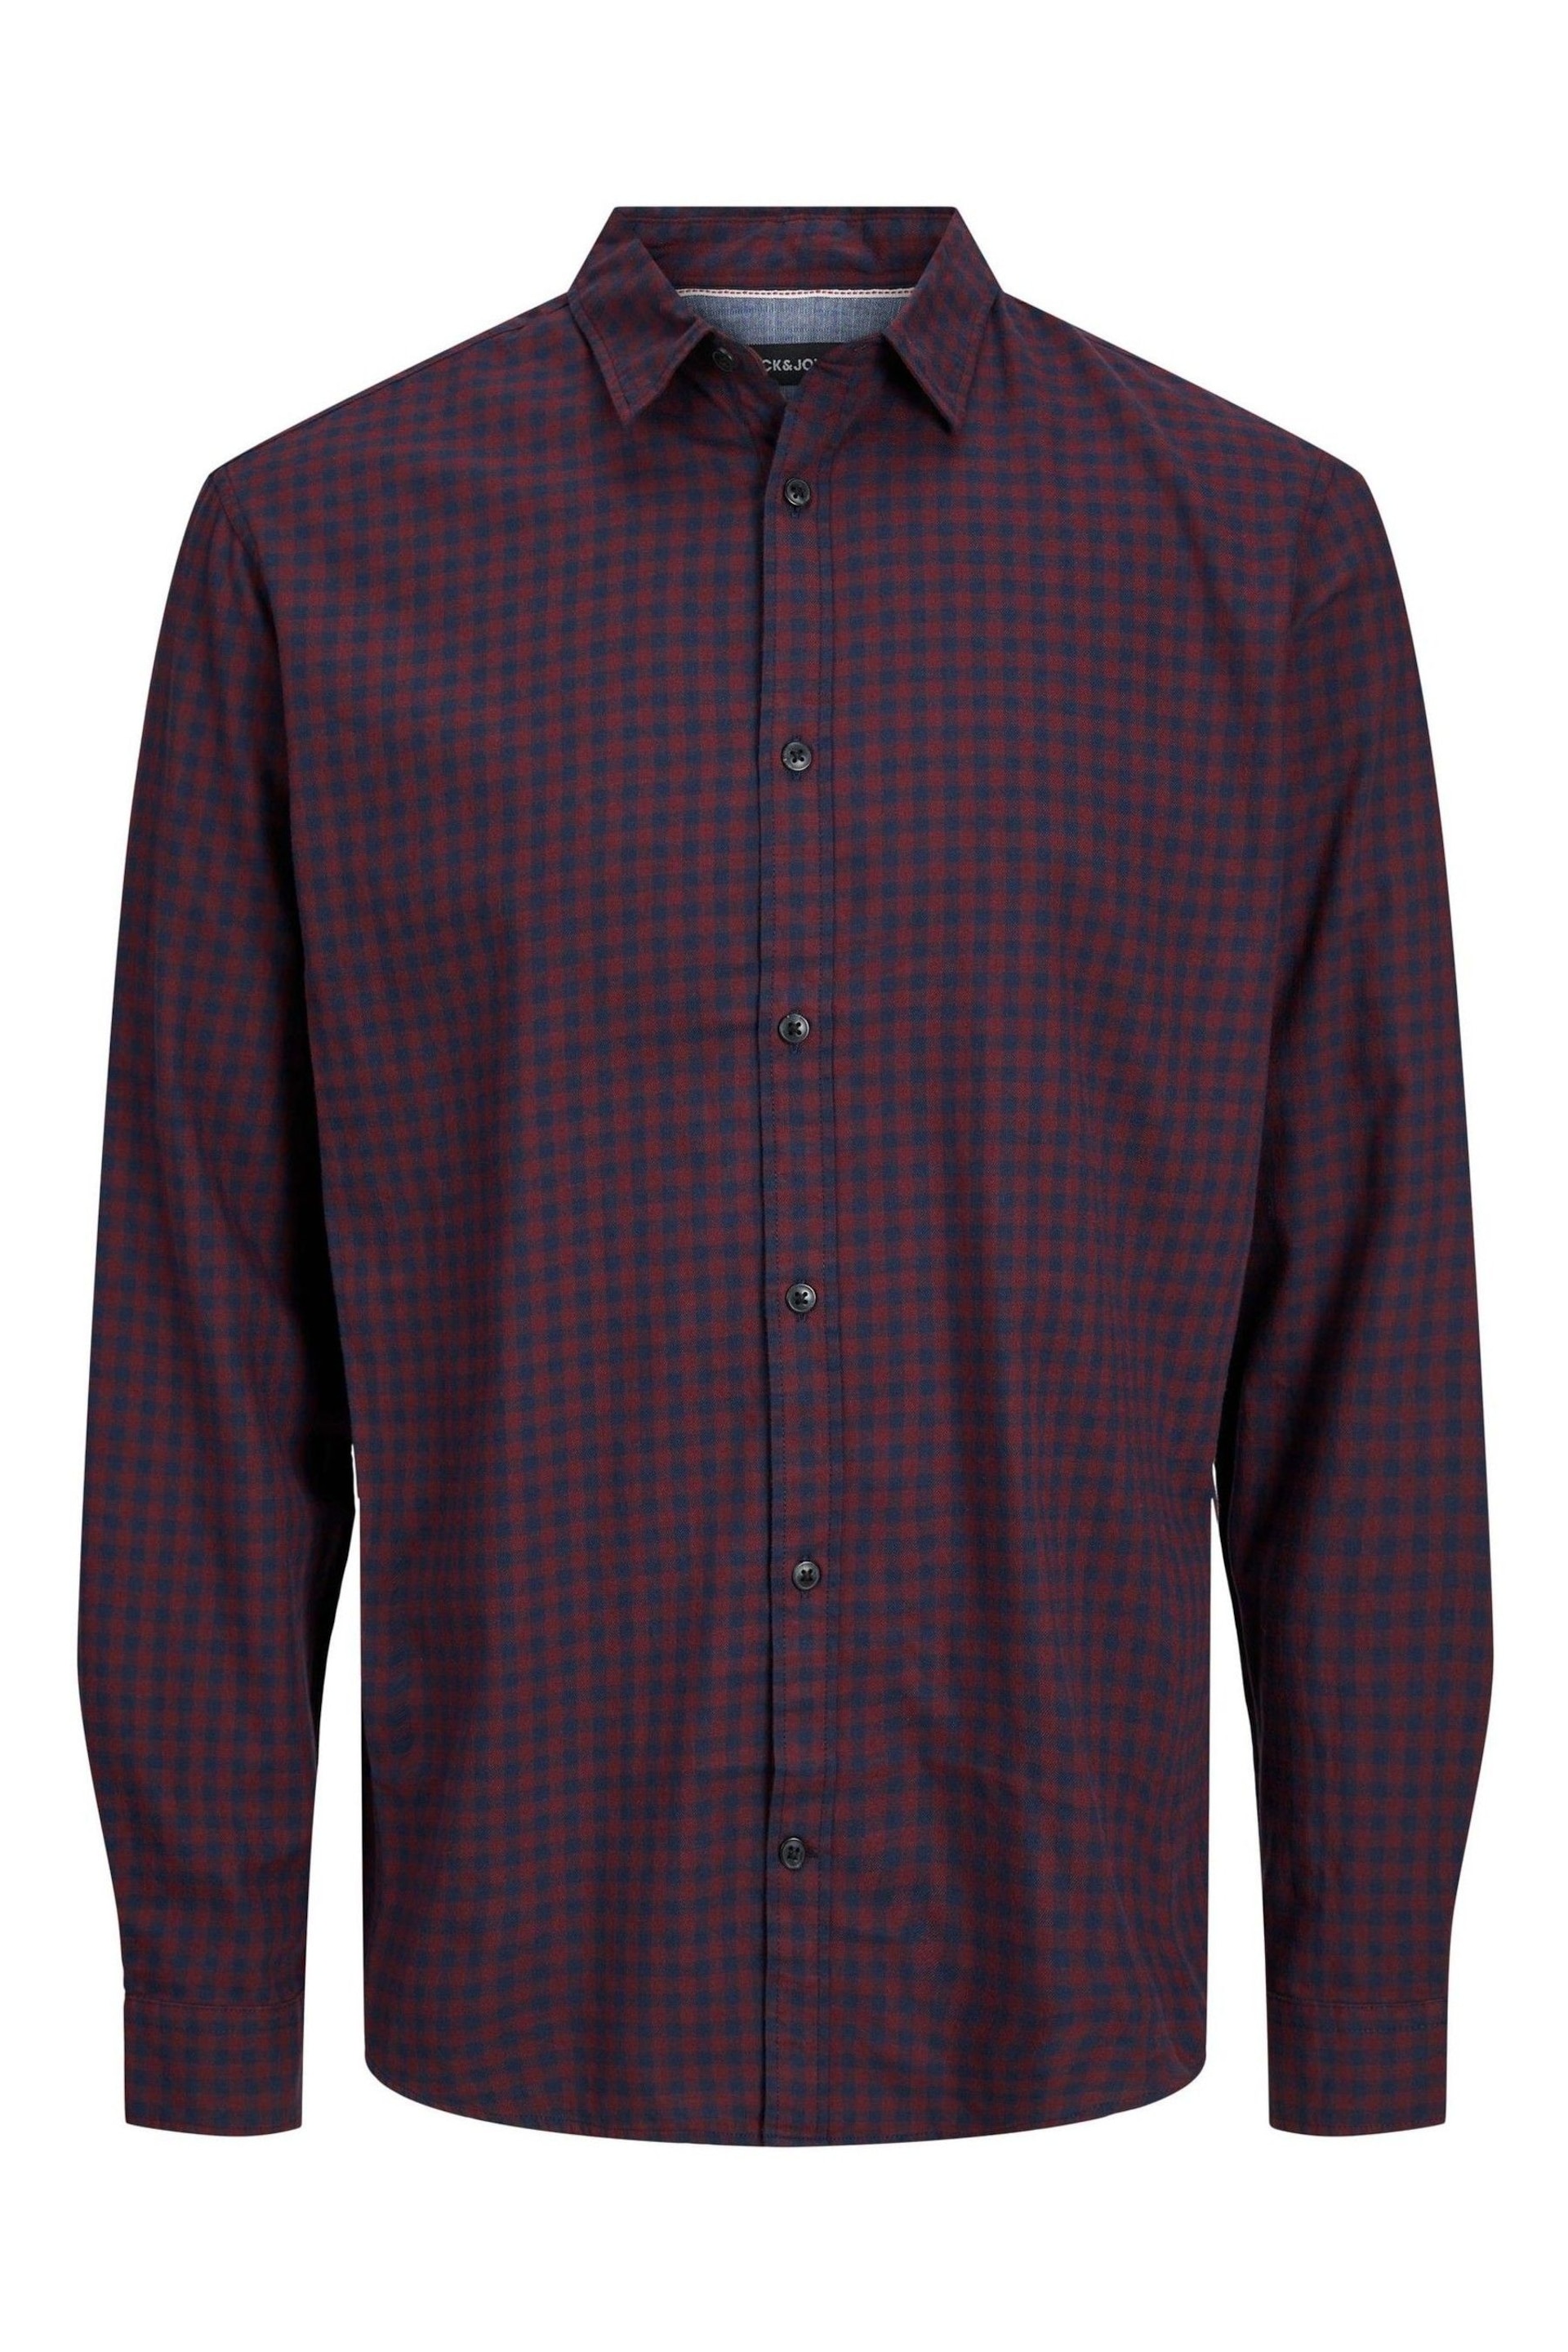 JACK & JONES Purple Button Up Shirt - Image 6 of 7